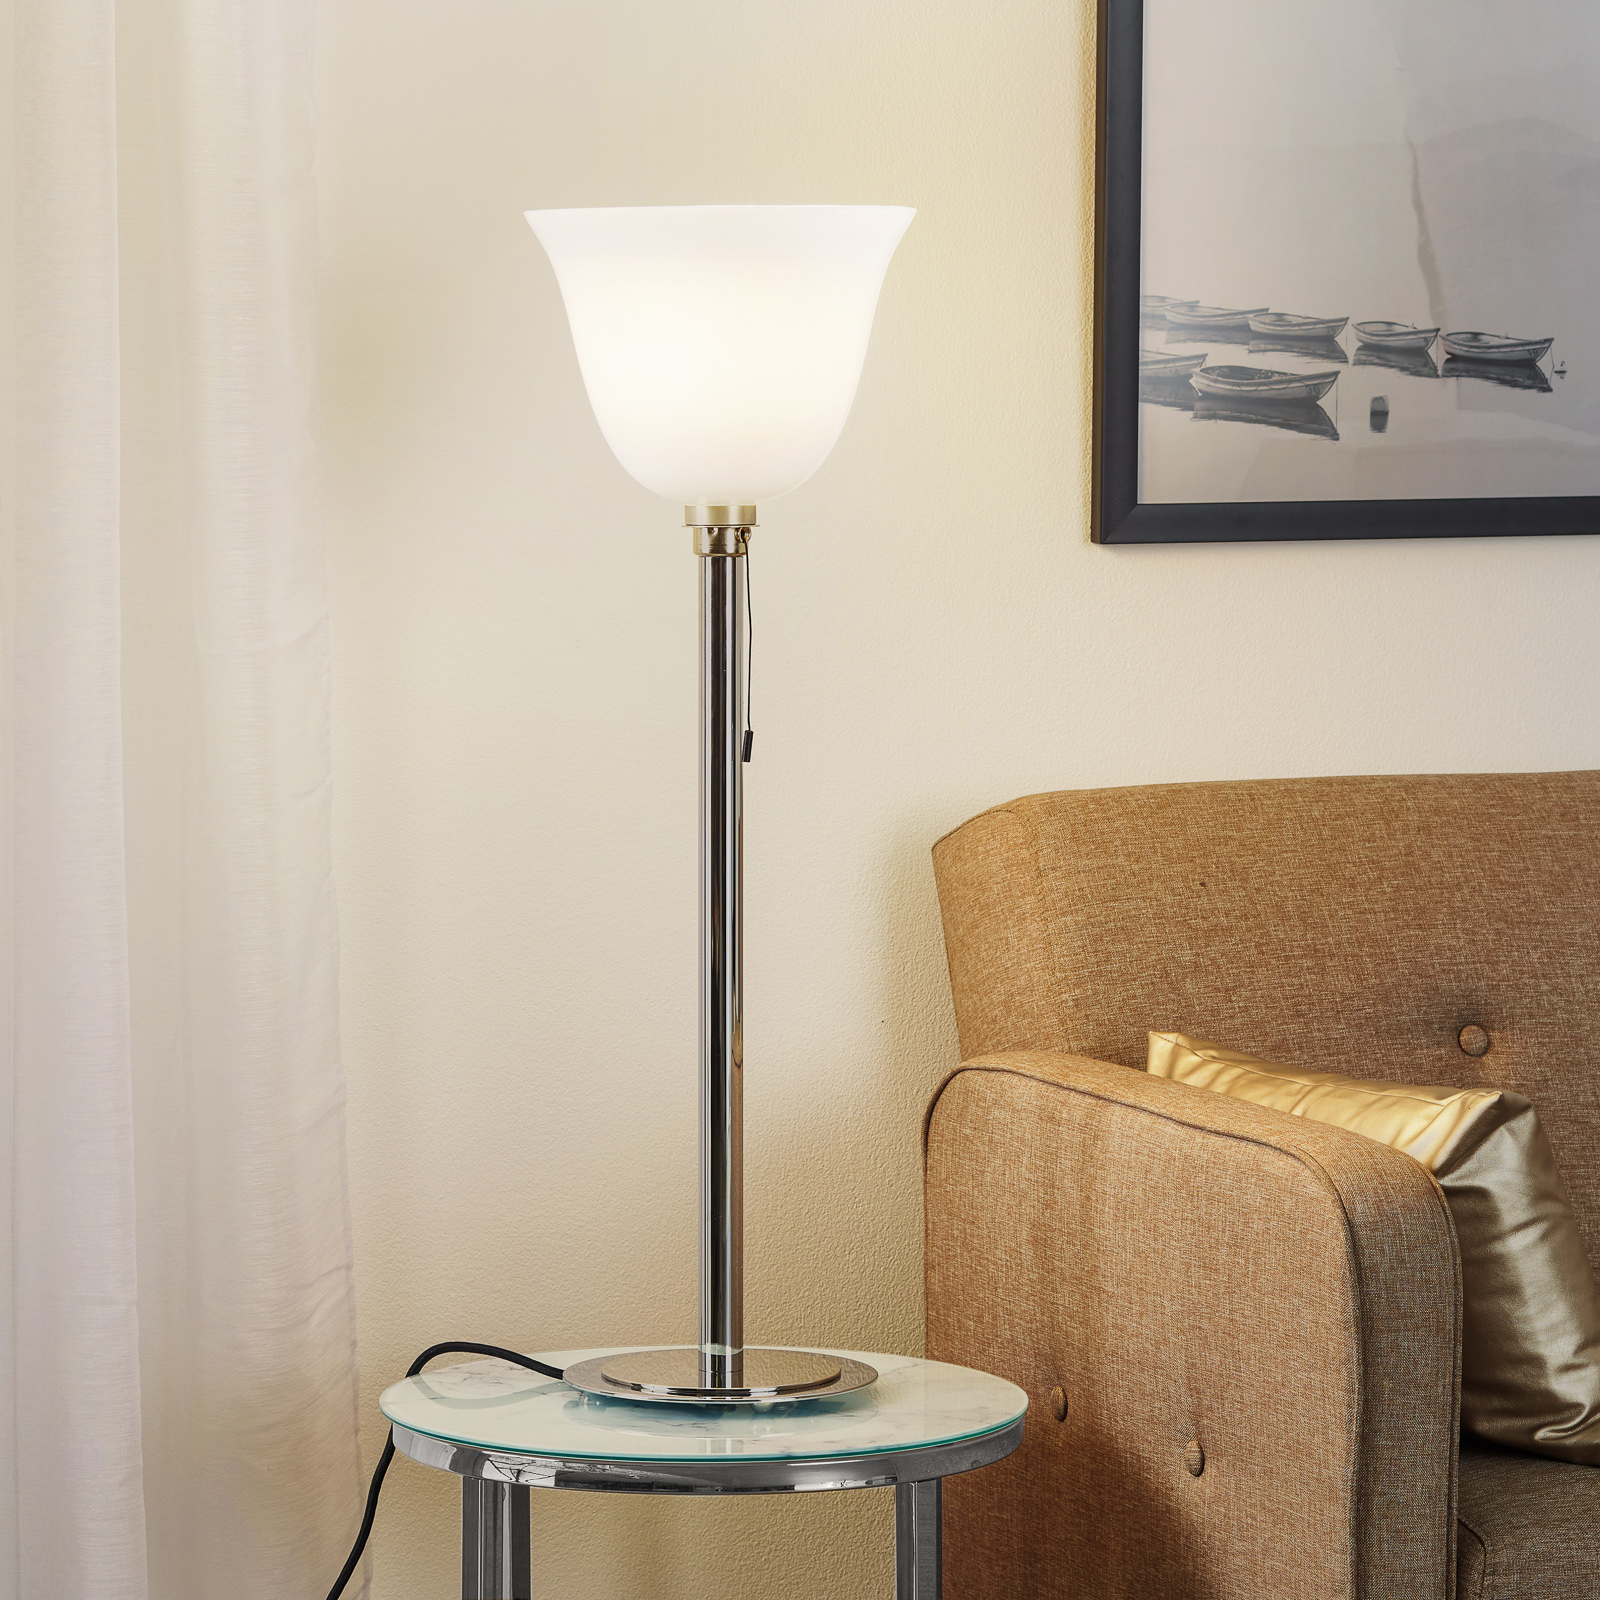 Art vloerlamp ontwerp | Lampen24.be